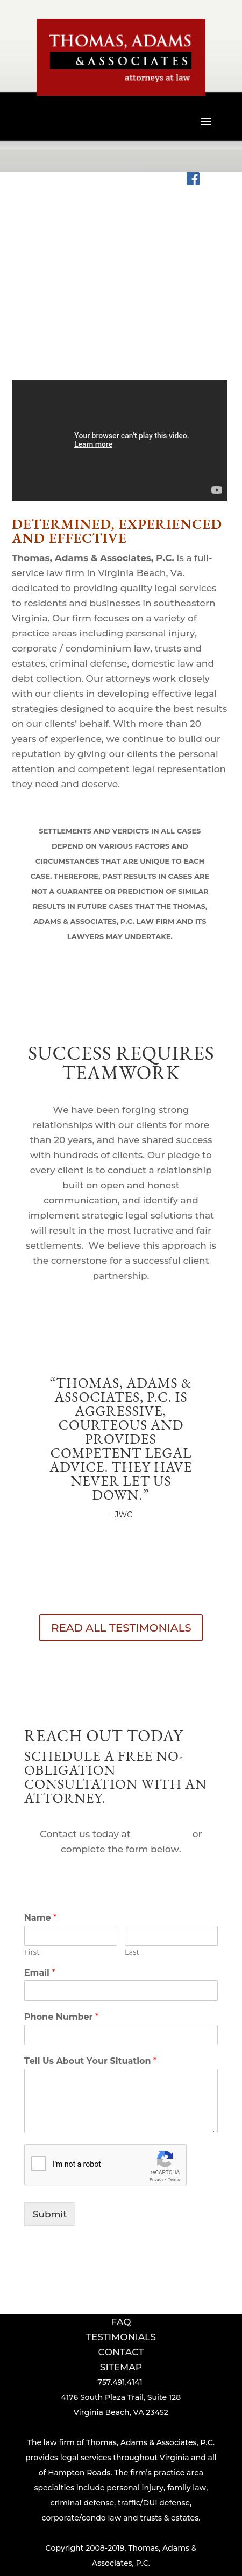 Thomas & Associates, P.C. Attorneys At Law - Virginia Beach VA Lawyers